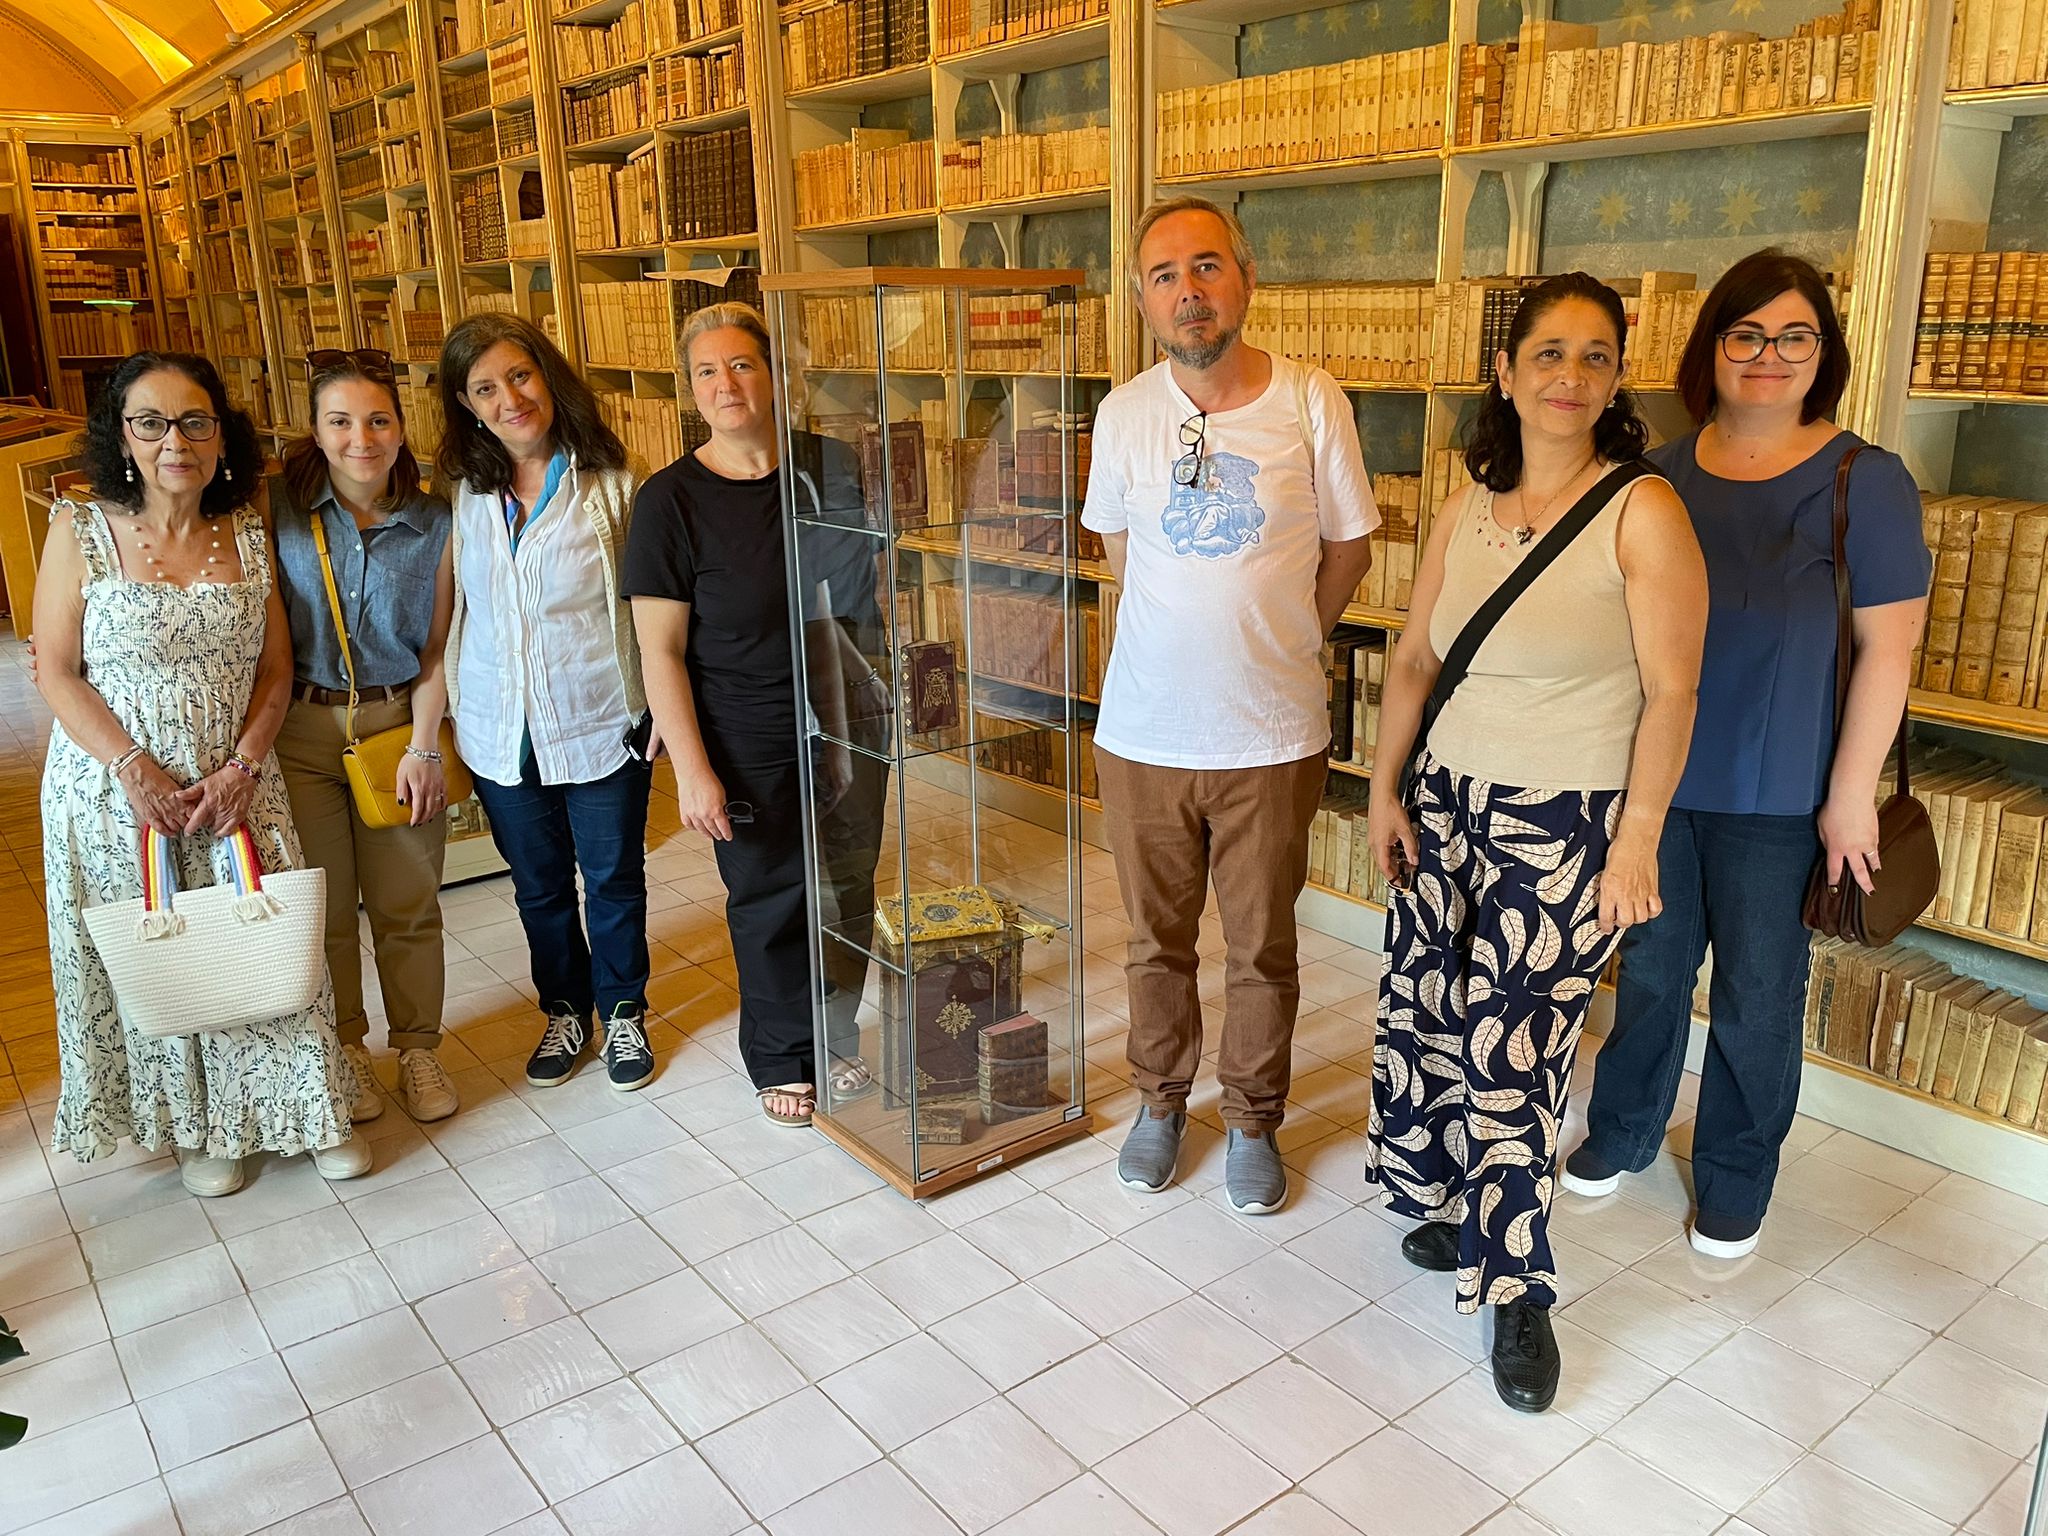 CODICIS ERASMUS. Universitari restano incantati dal patrimonio librario della biblioteca Santa Maria La Nuova